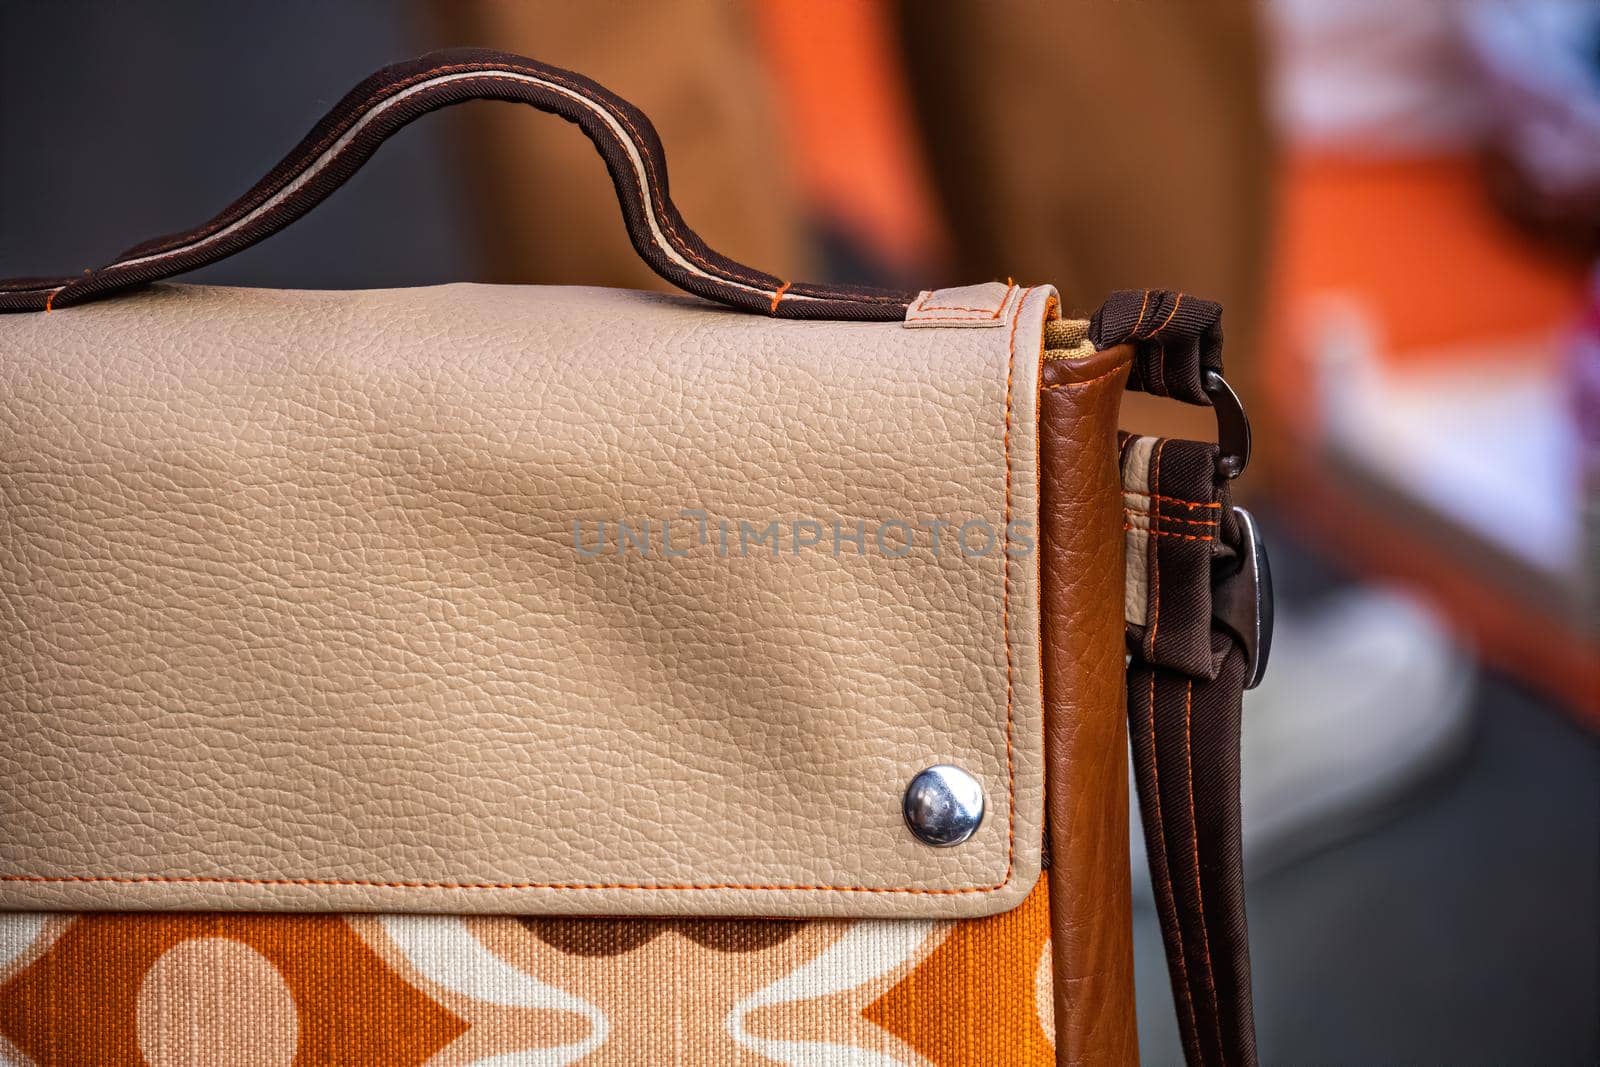 Close-up of leather ladies handbag. Fashion and handmade concept